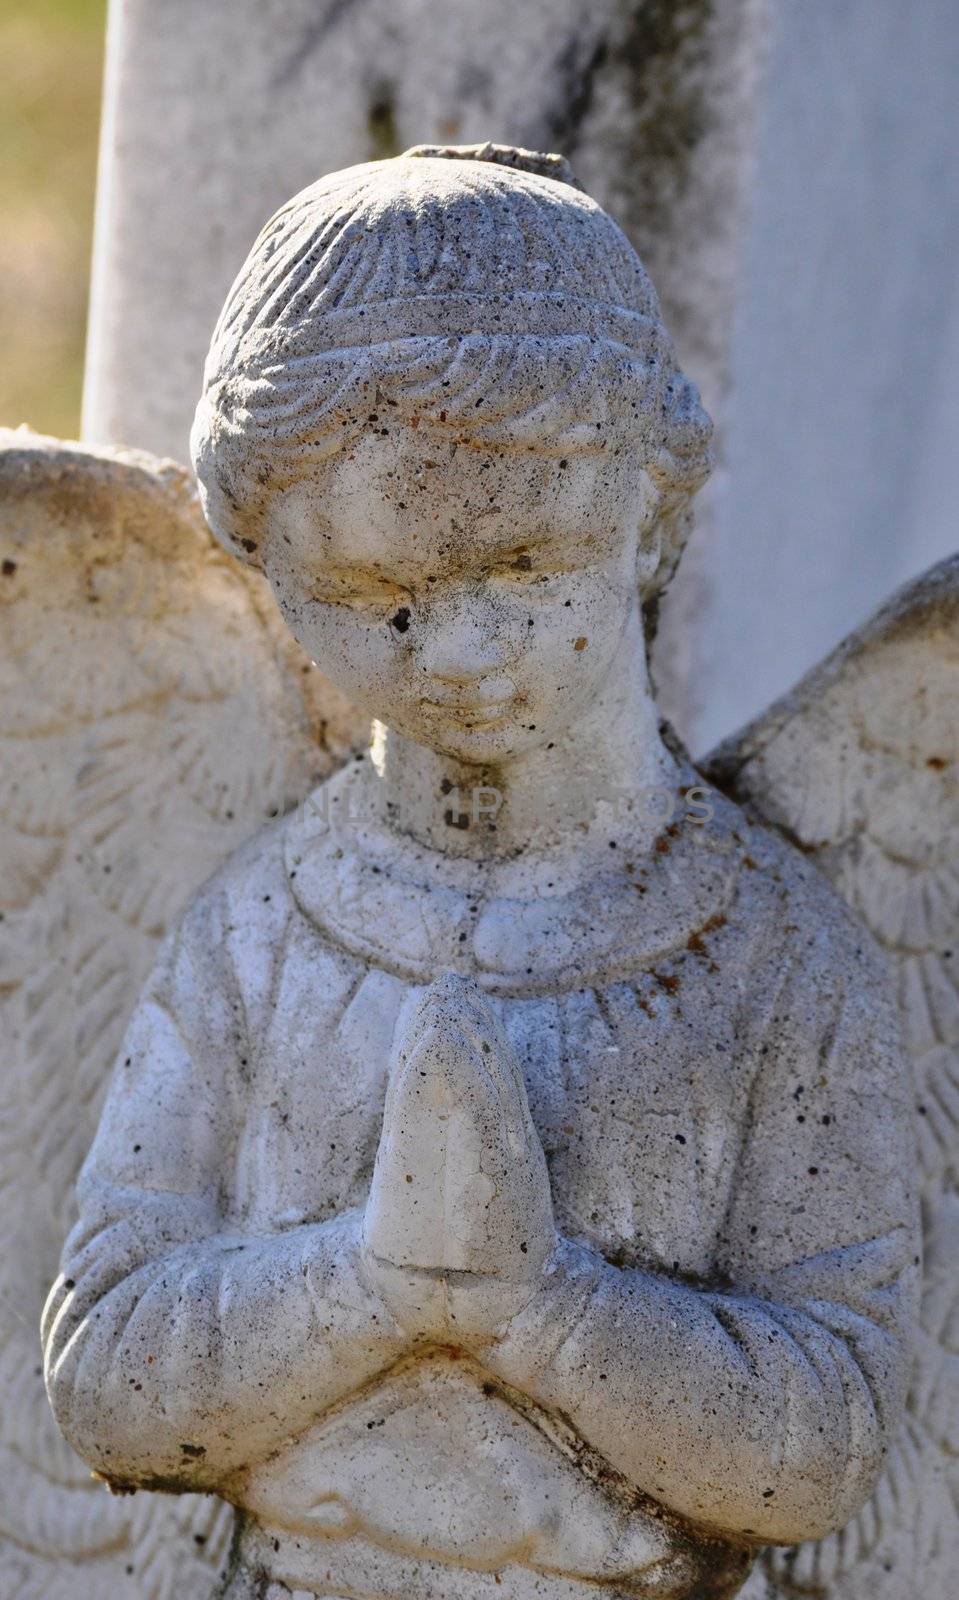 Gravesite - Angel - closeup